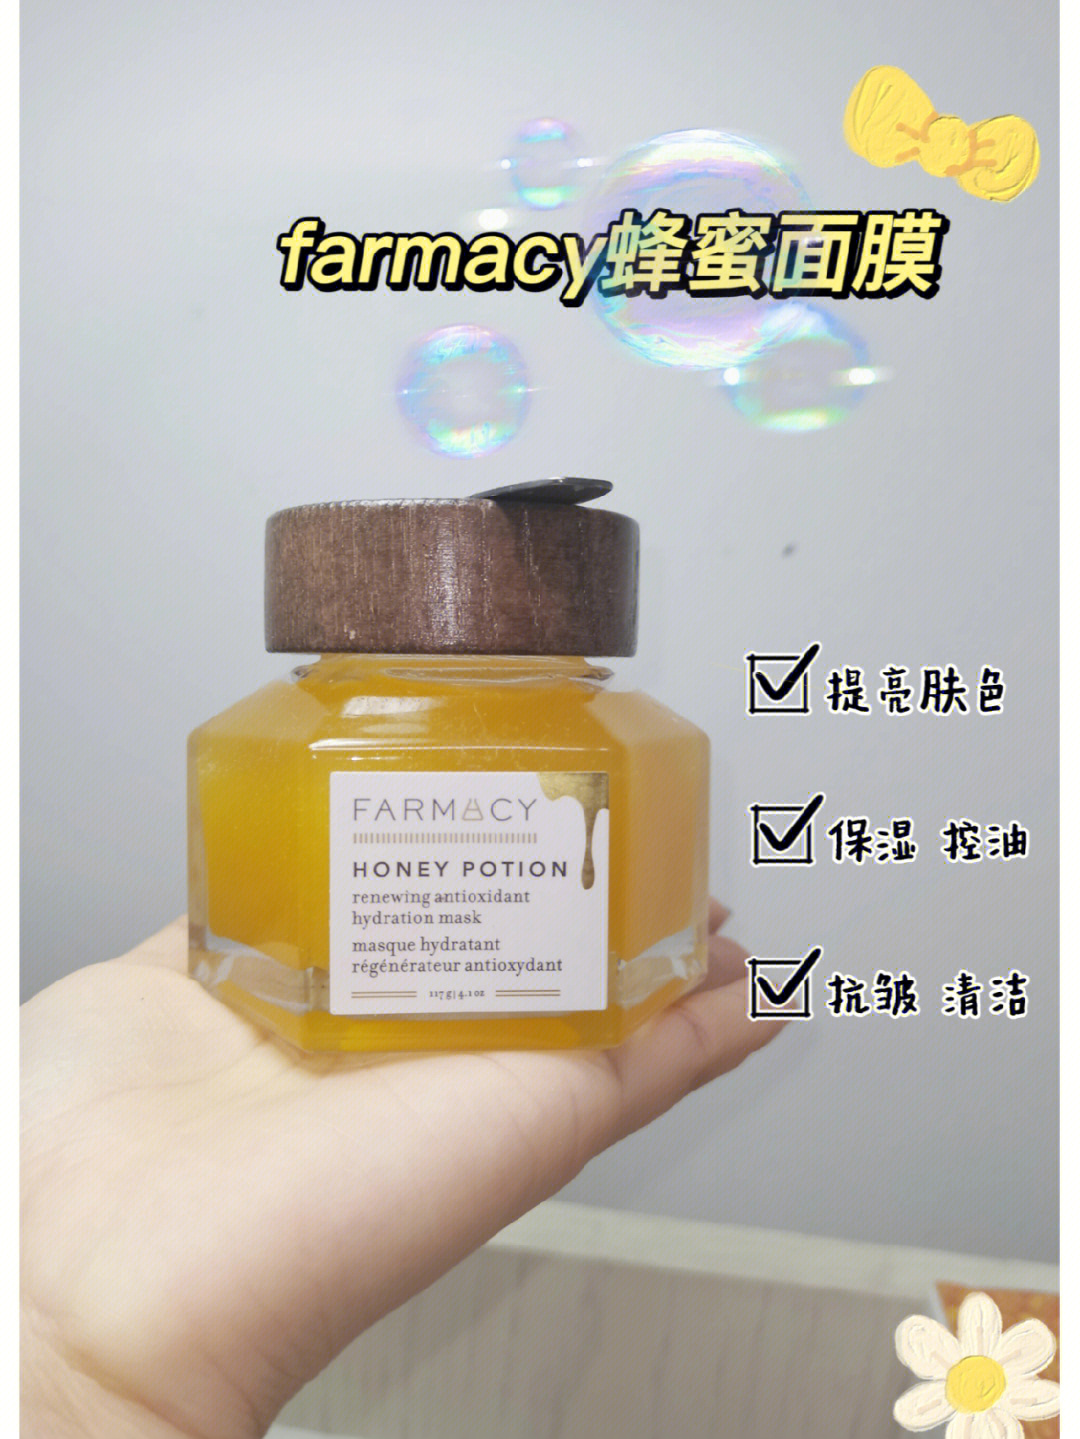 farmacy蜂蜜面膜测评图片